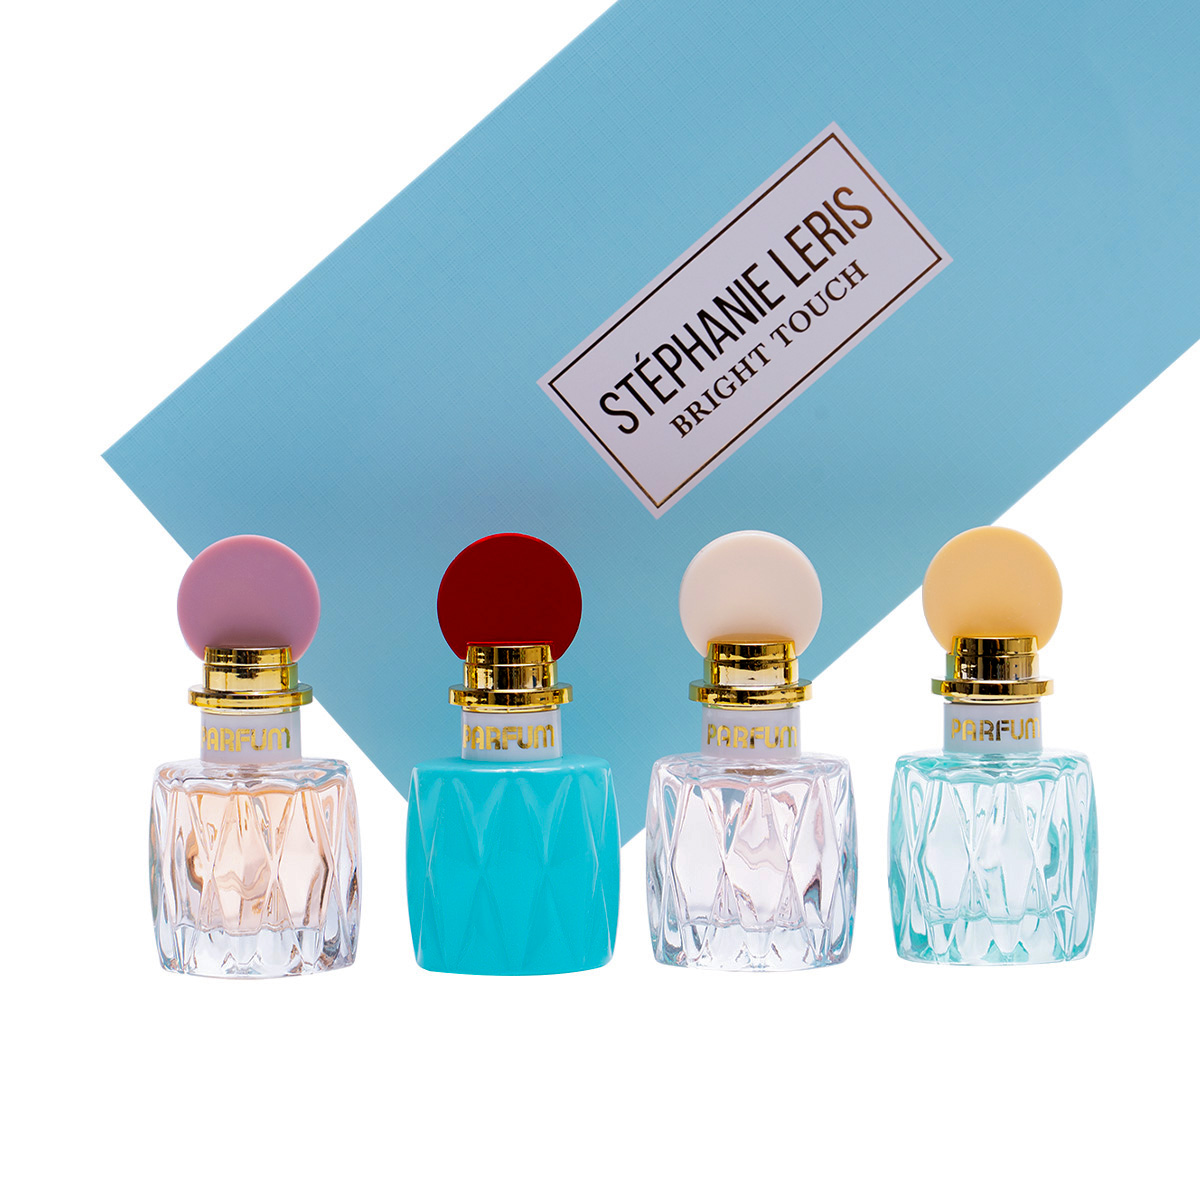 glamour stephanie leris набор женского парфюма 5 в 1 Stephanie Leris Bright Touch, набор женского парфюма 4 в 1 (4 шт. по 25 мл)